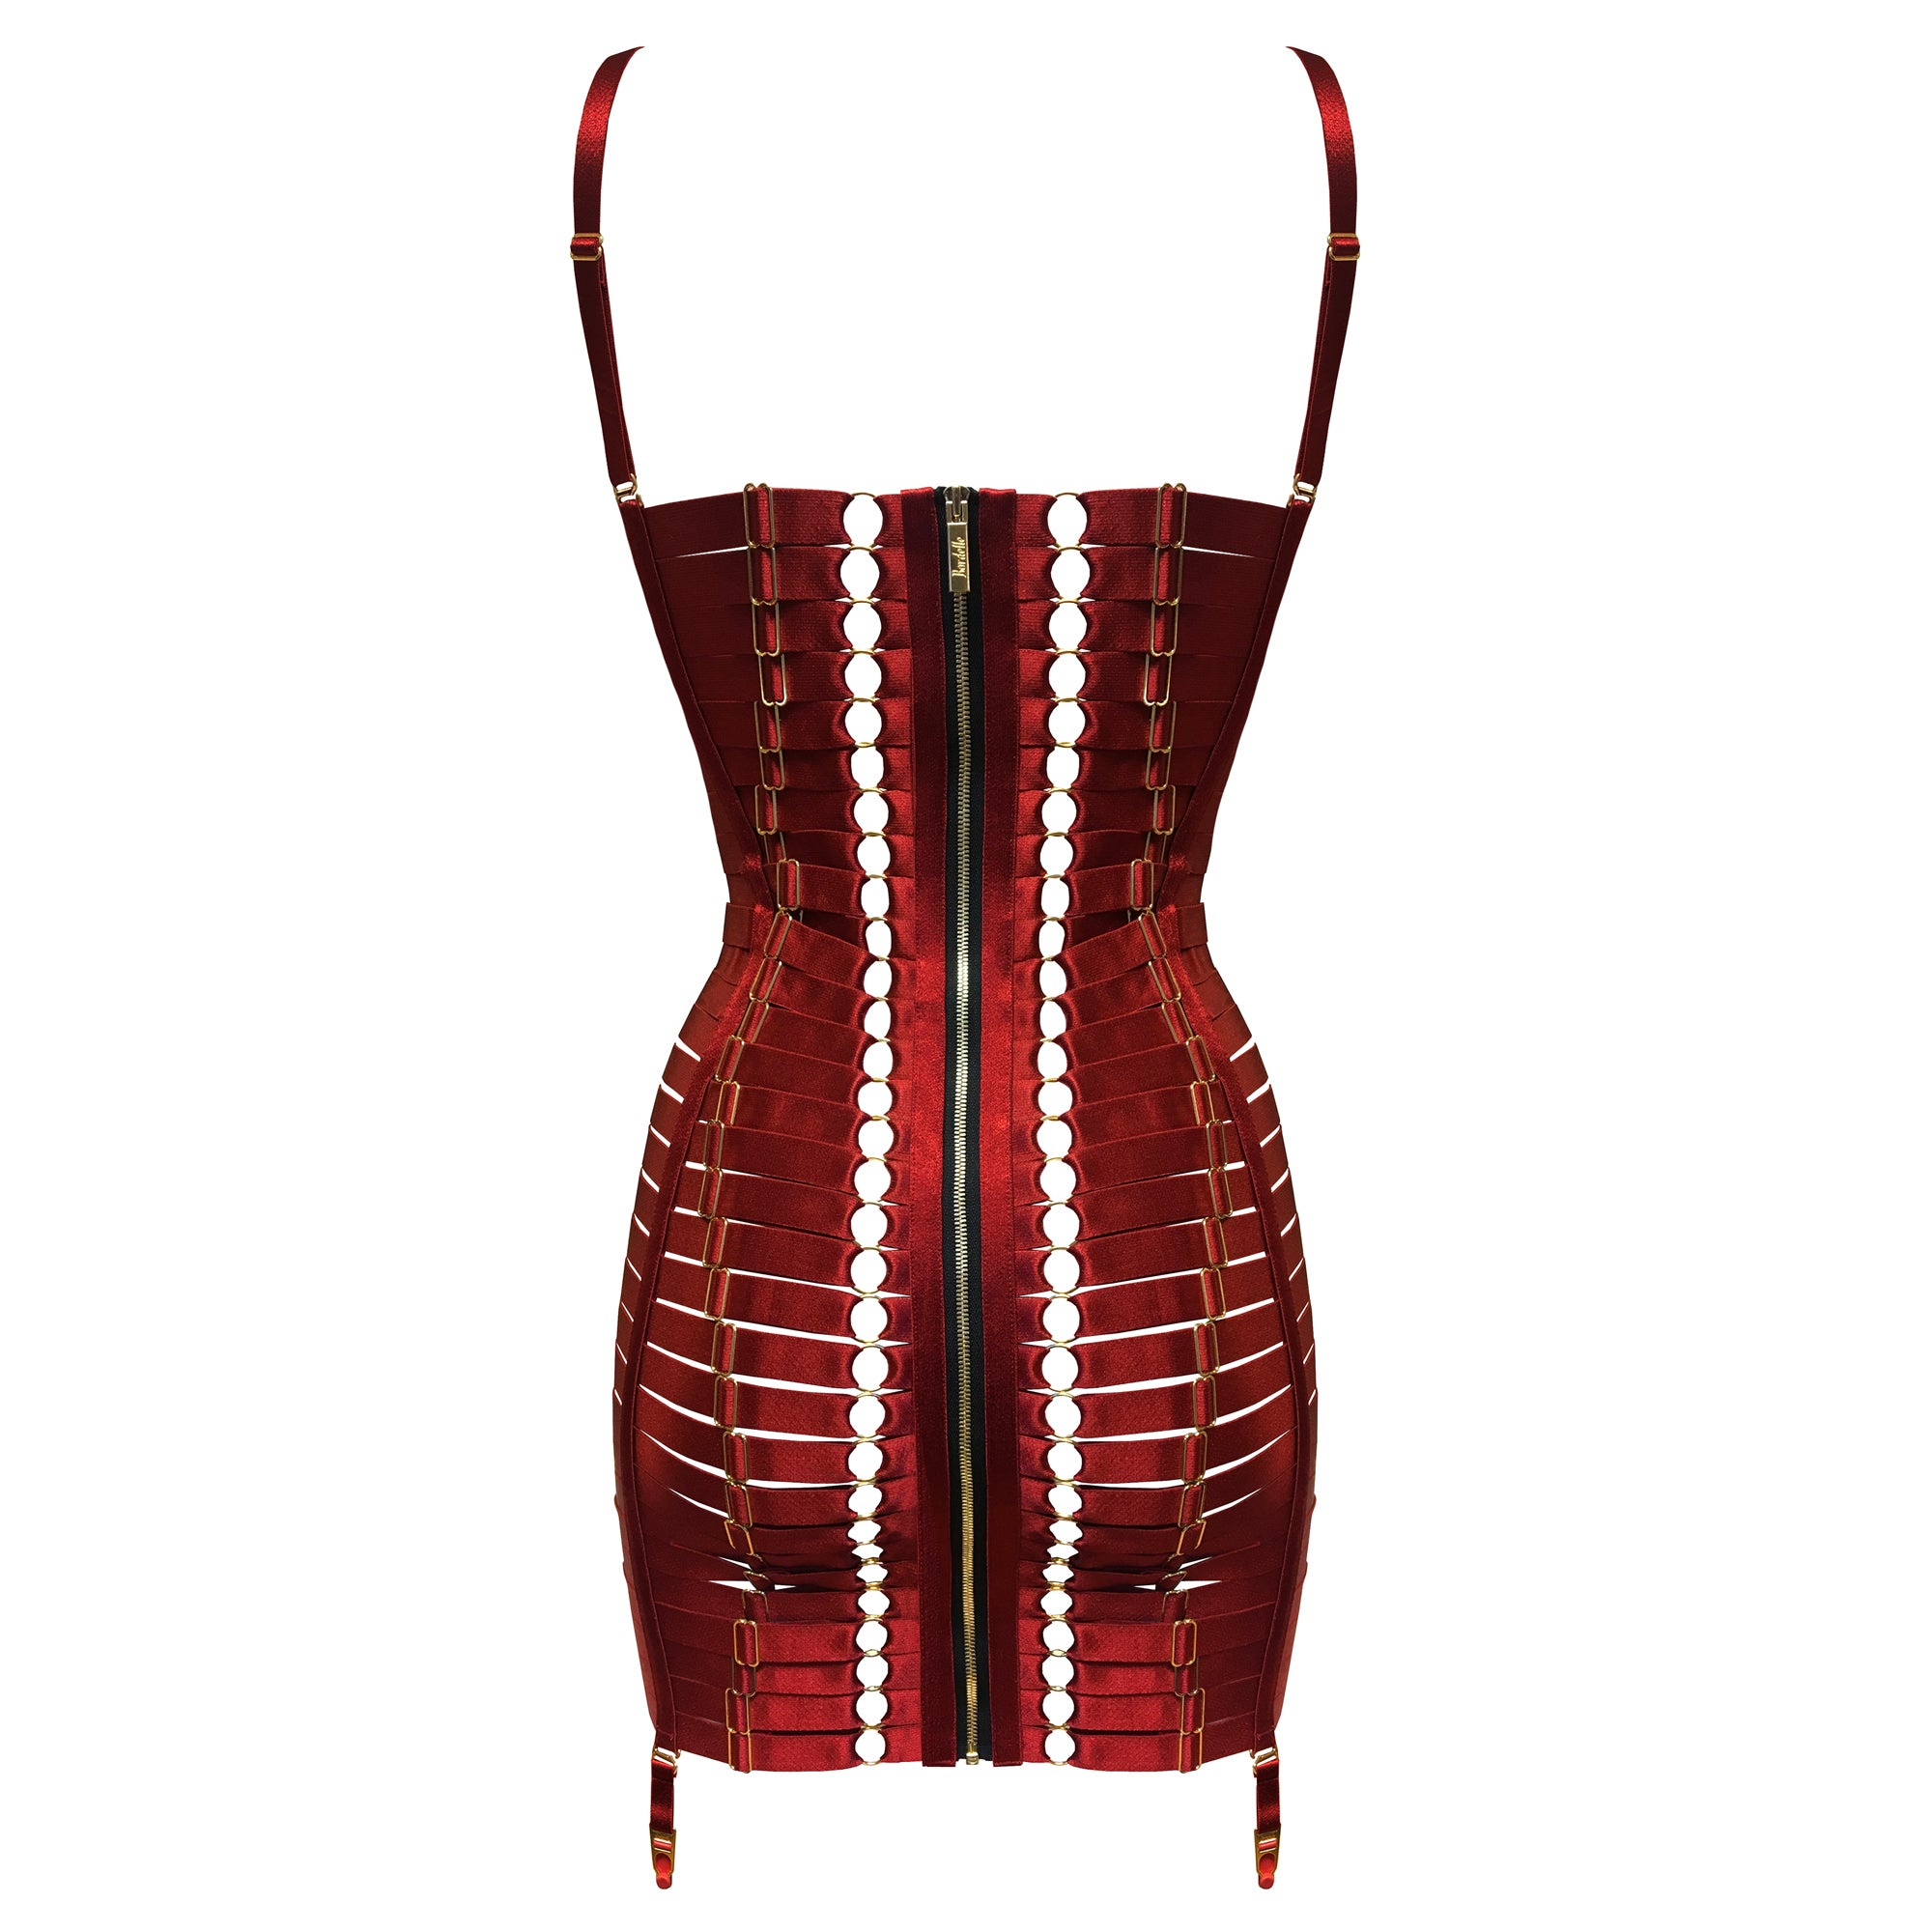 Bordelle Adjustable Angela dress in red corset style luxury peep skin tight wearable lingerie